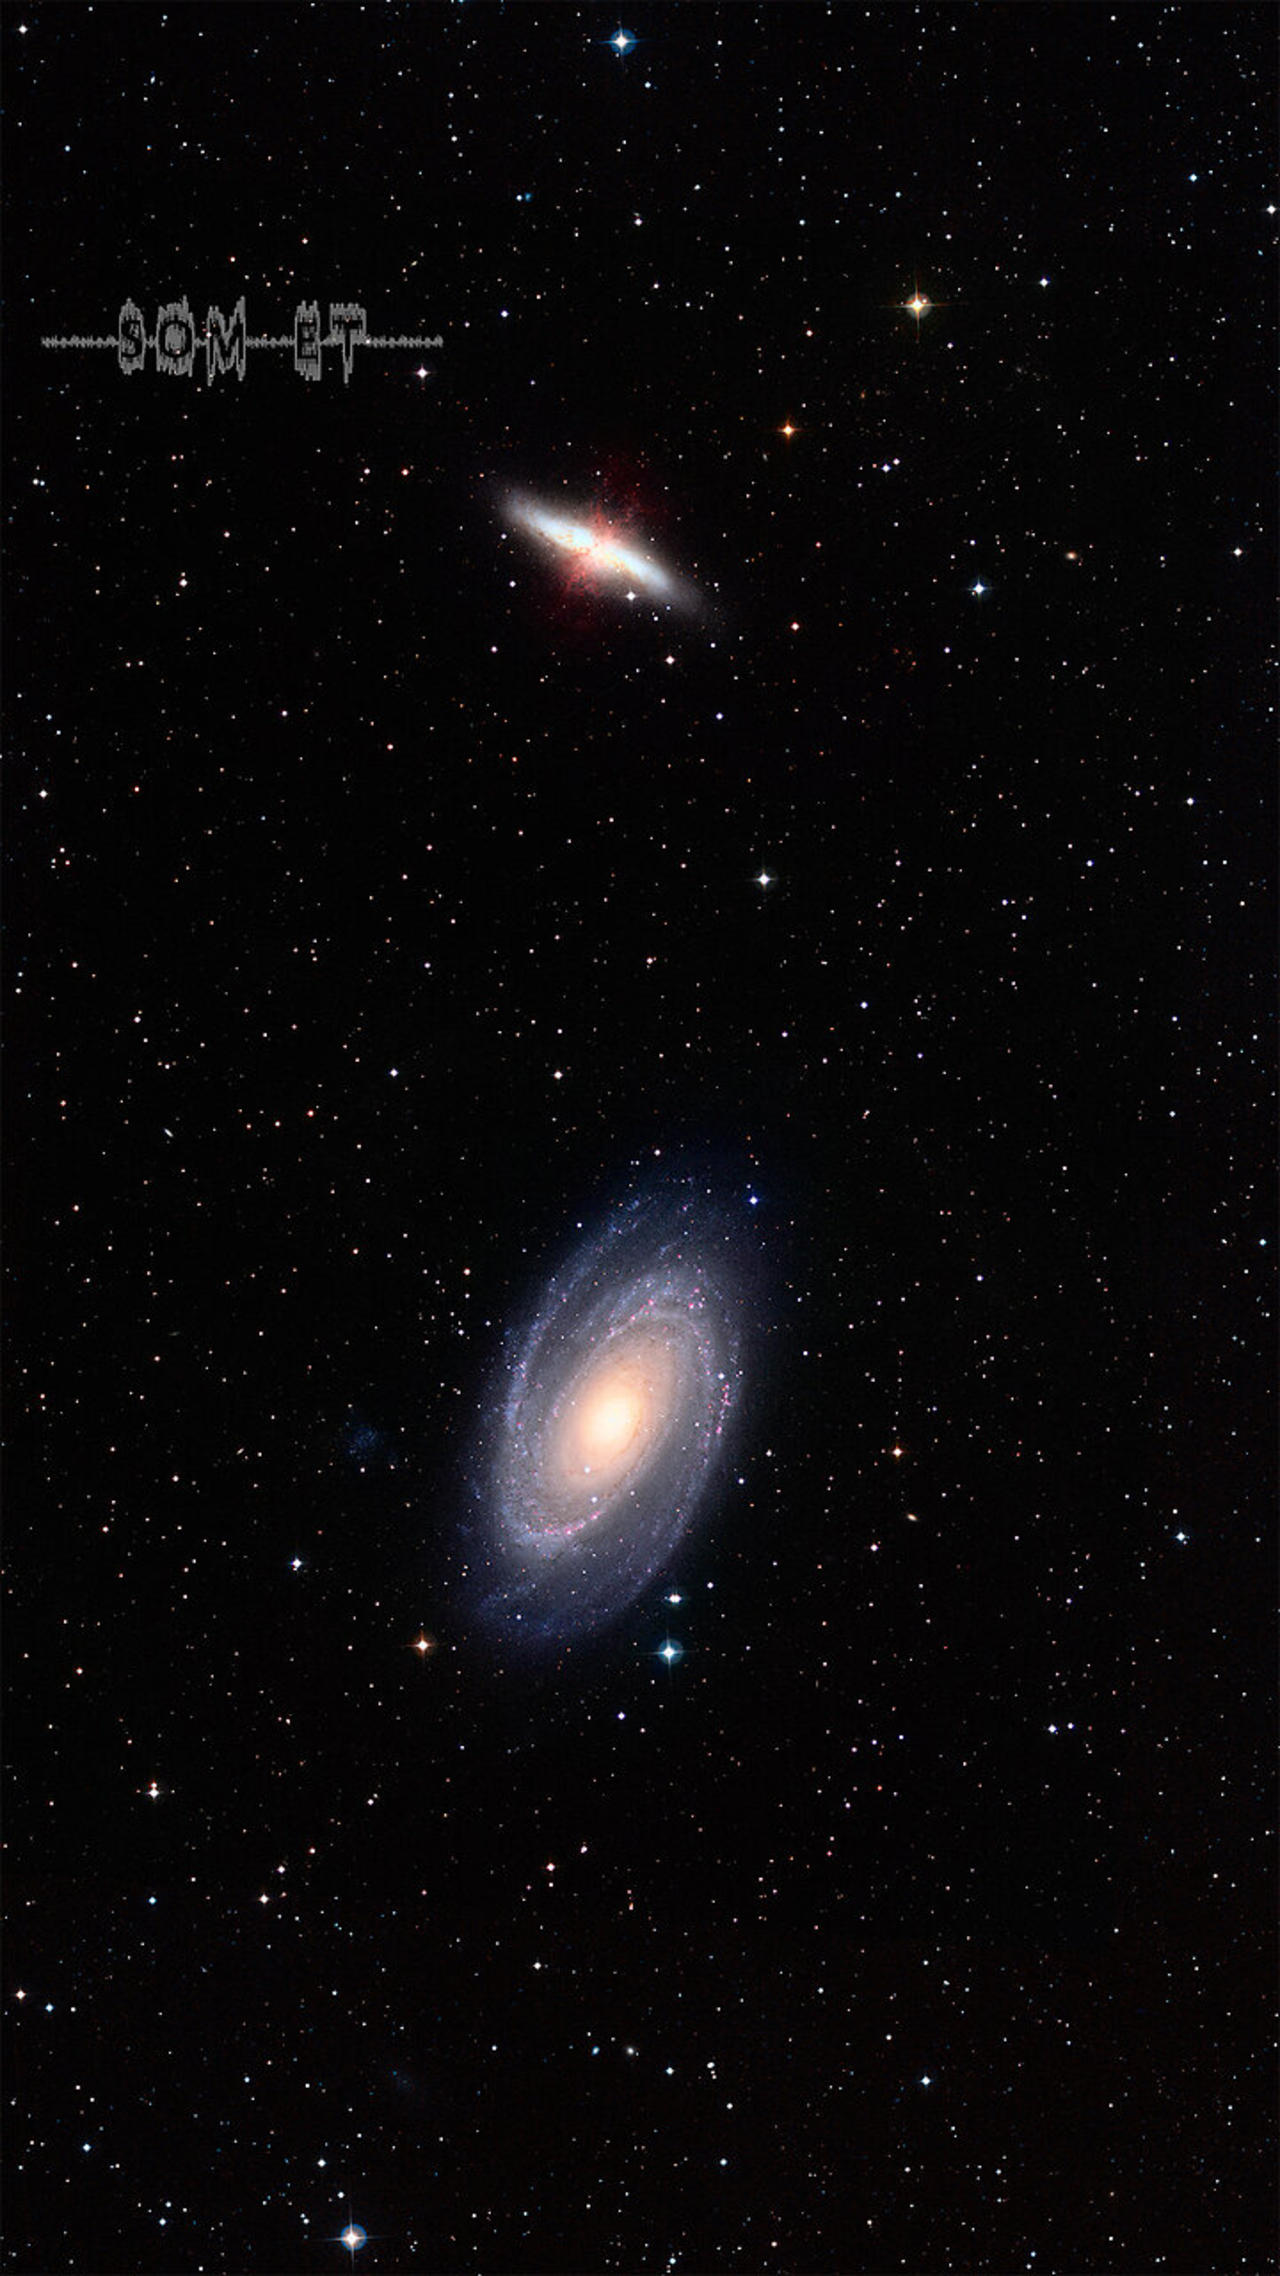 Som ET - 21 - M81 - Messier 81: Bode's Galaxy